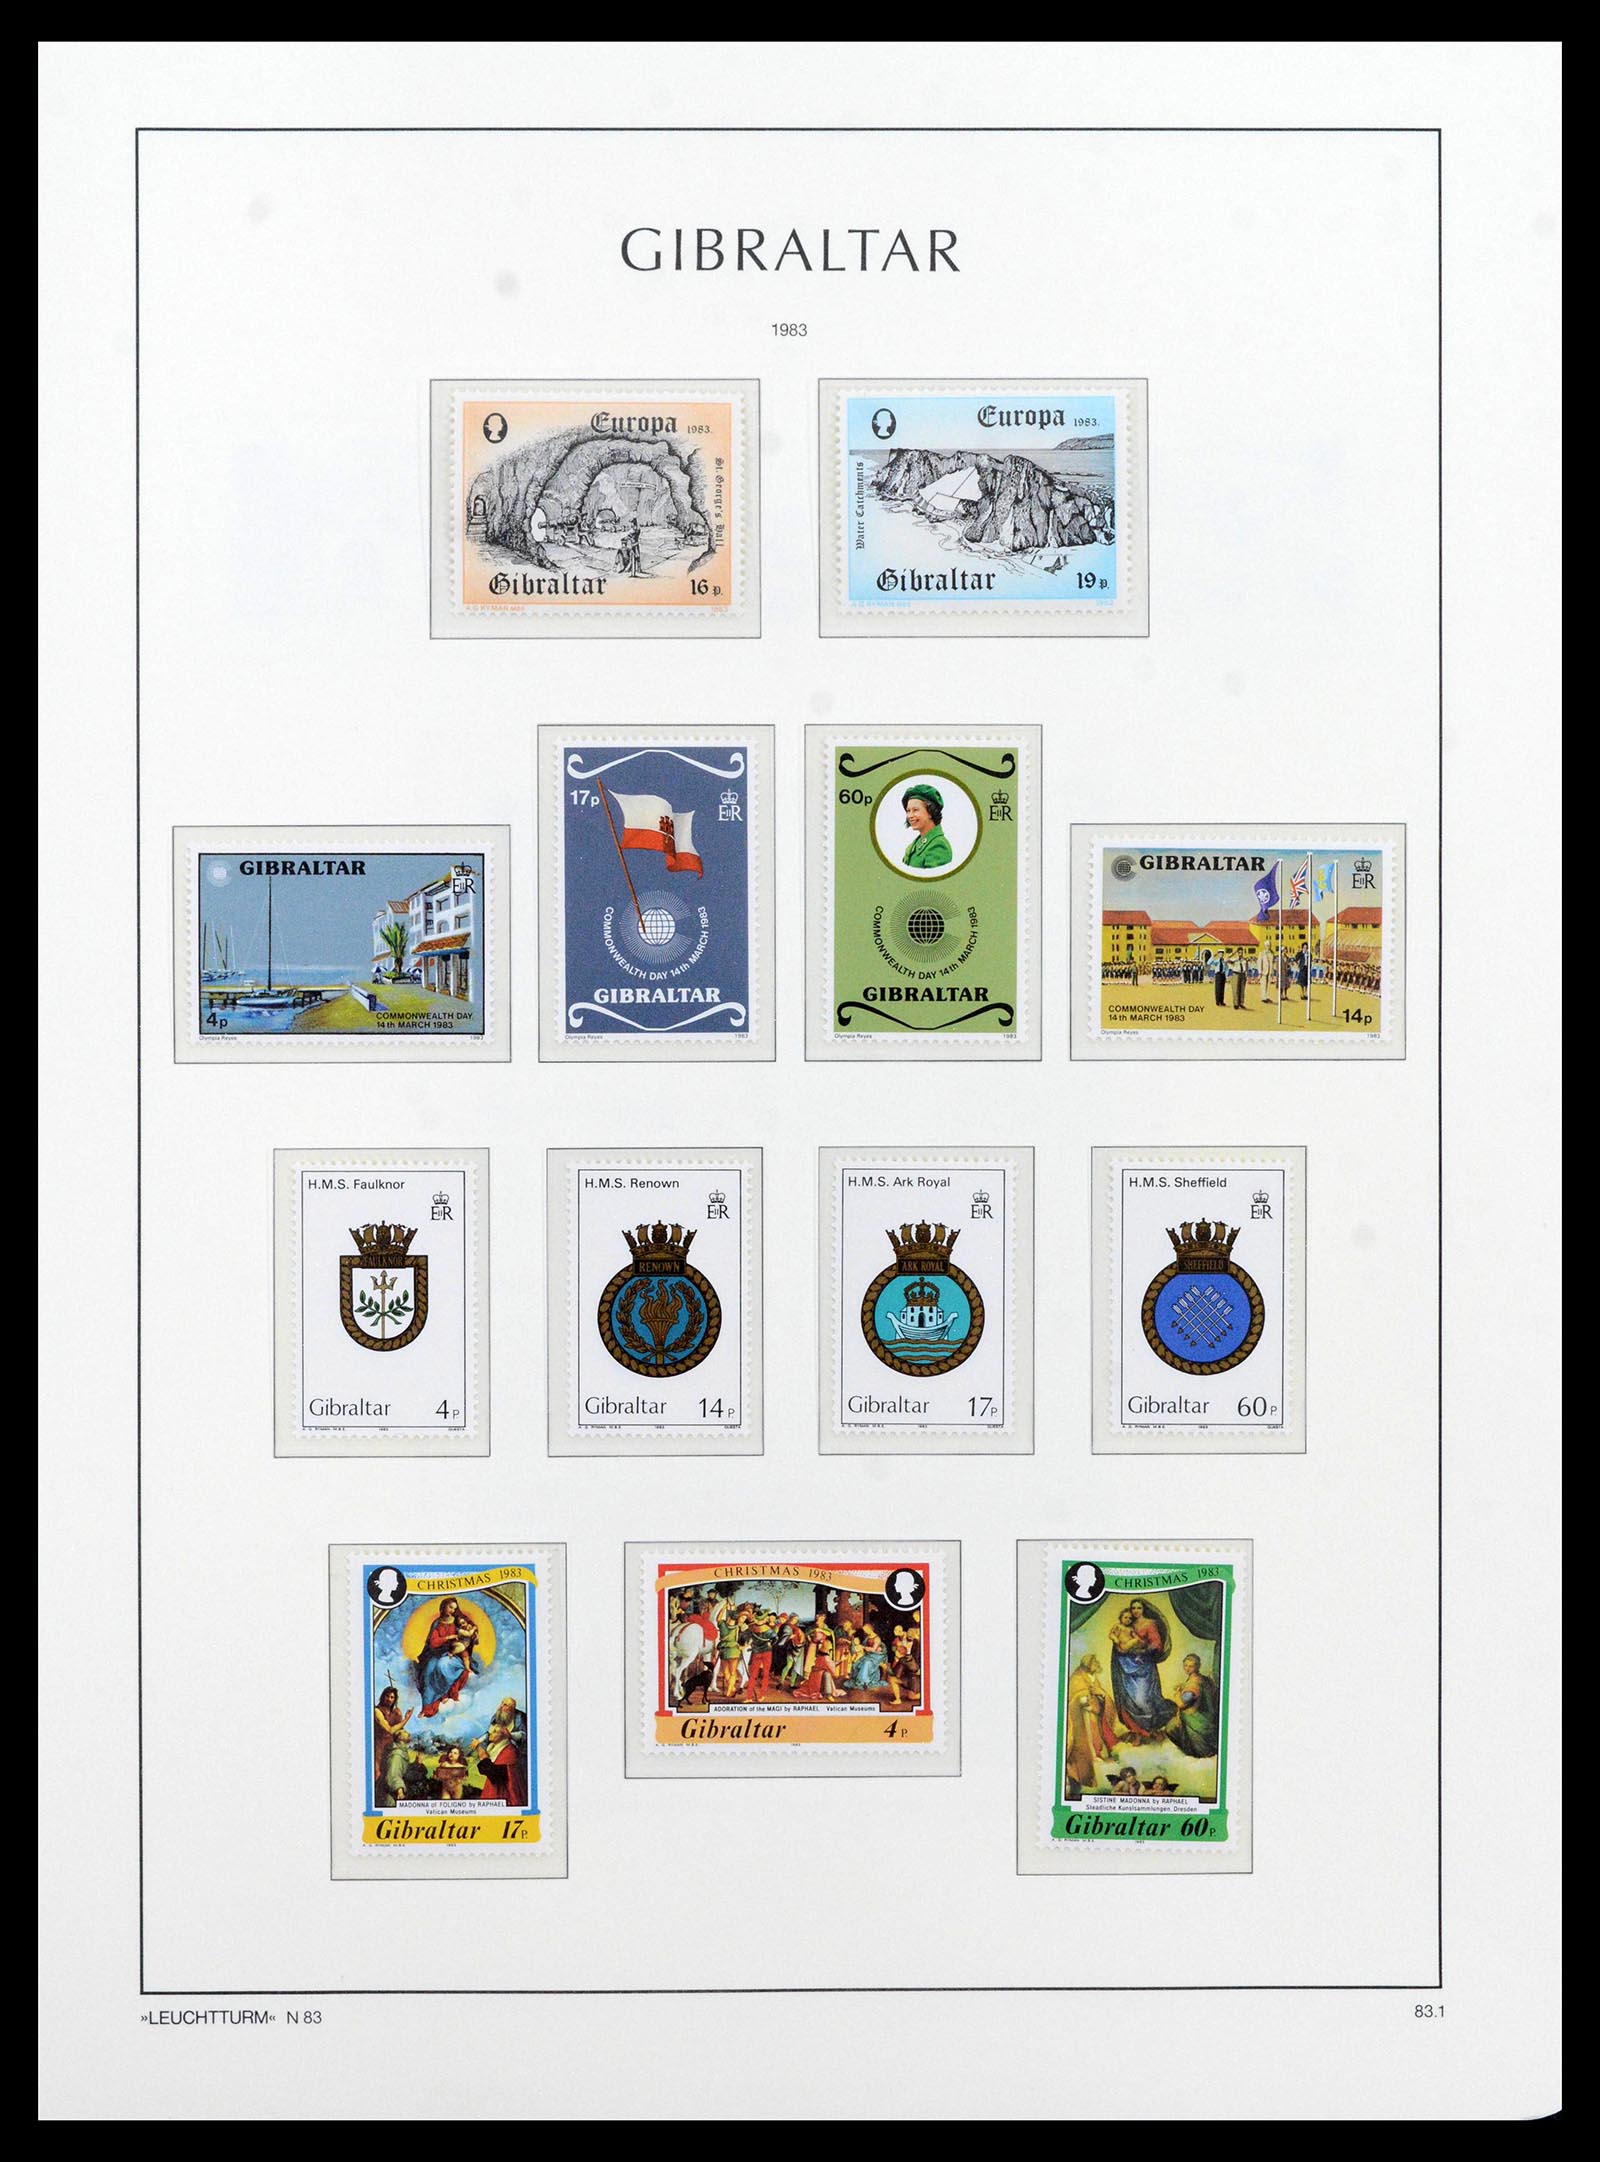 39158 0052 - Stamp collection 39158 Gibraltar 1886-2013.